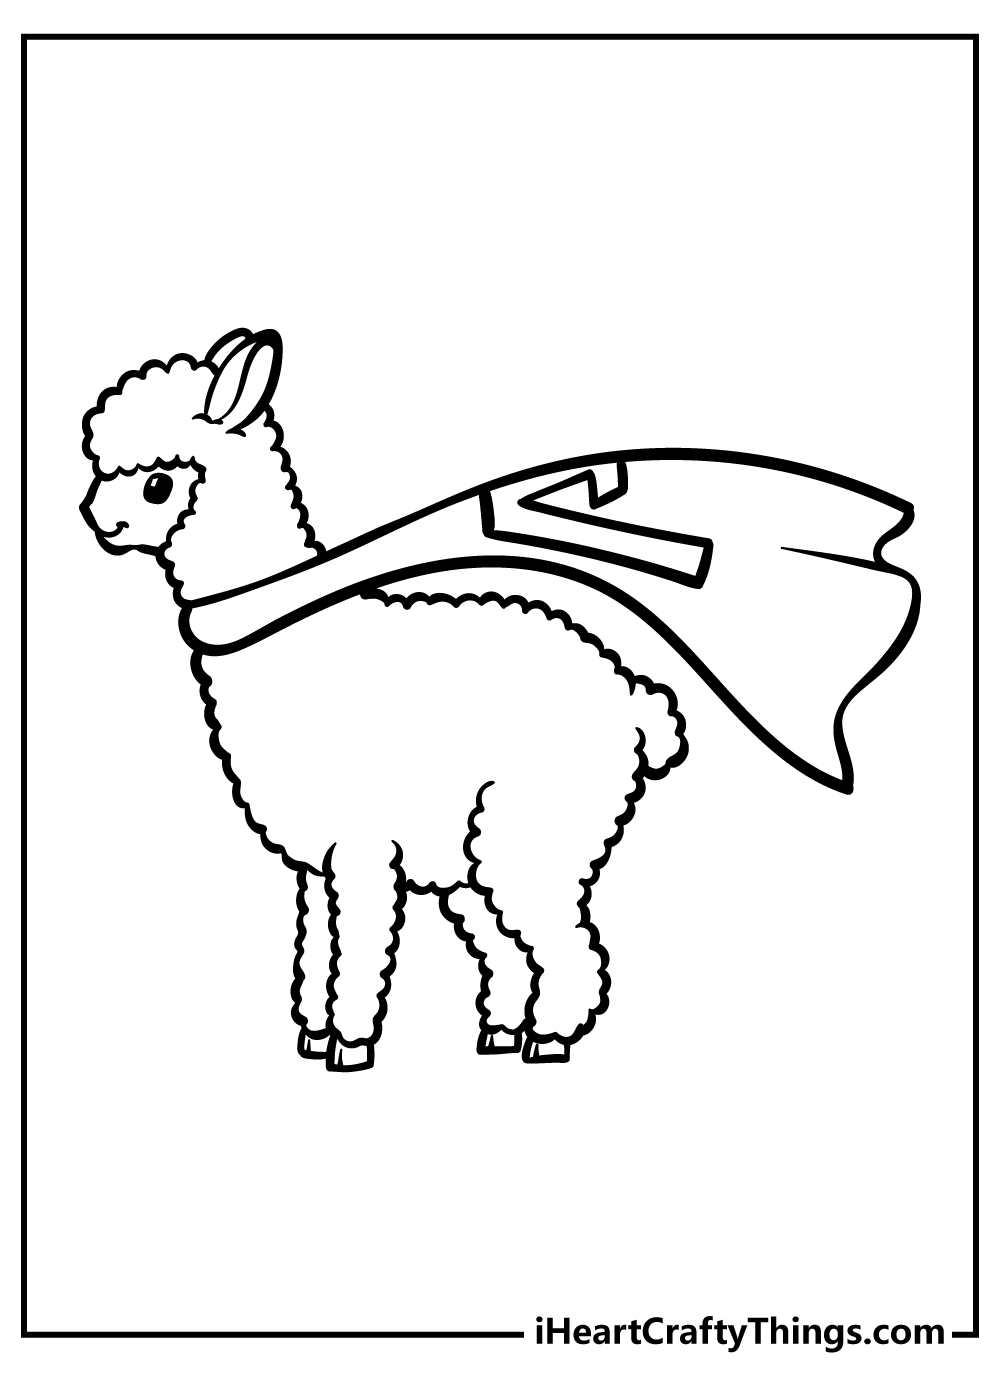 llama Coloring Pages free pdf download